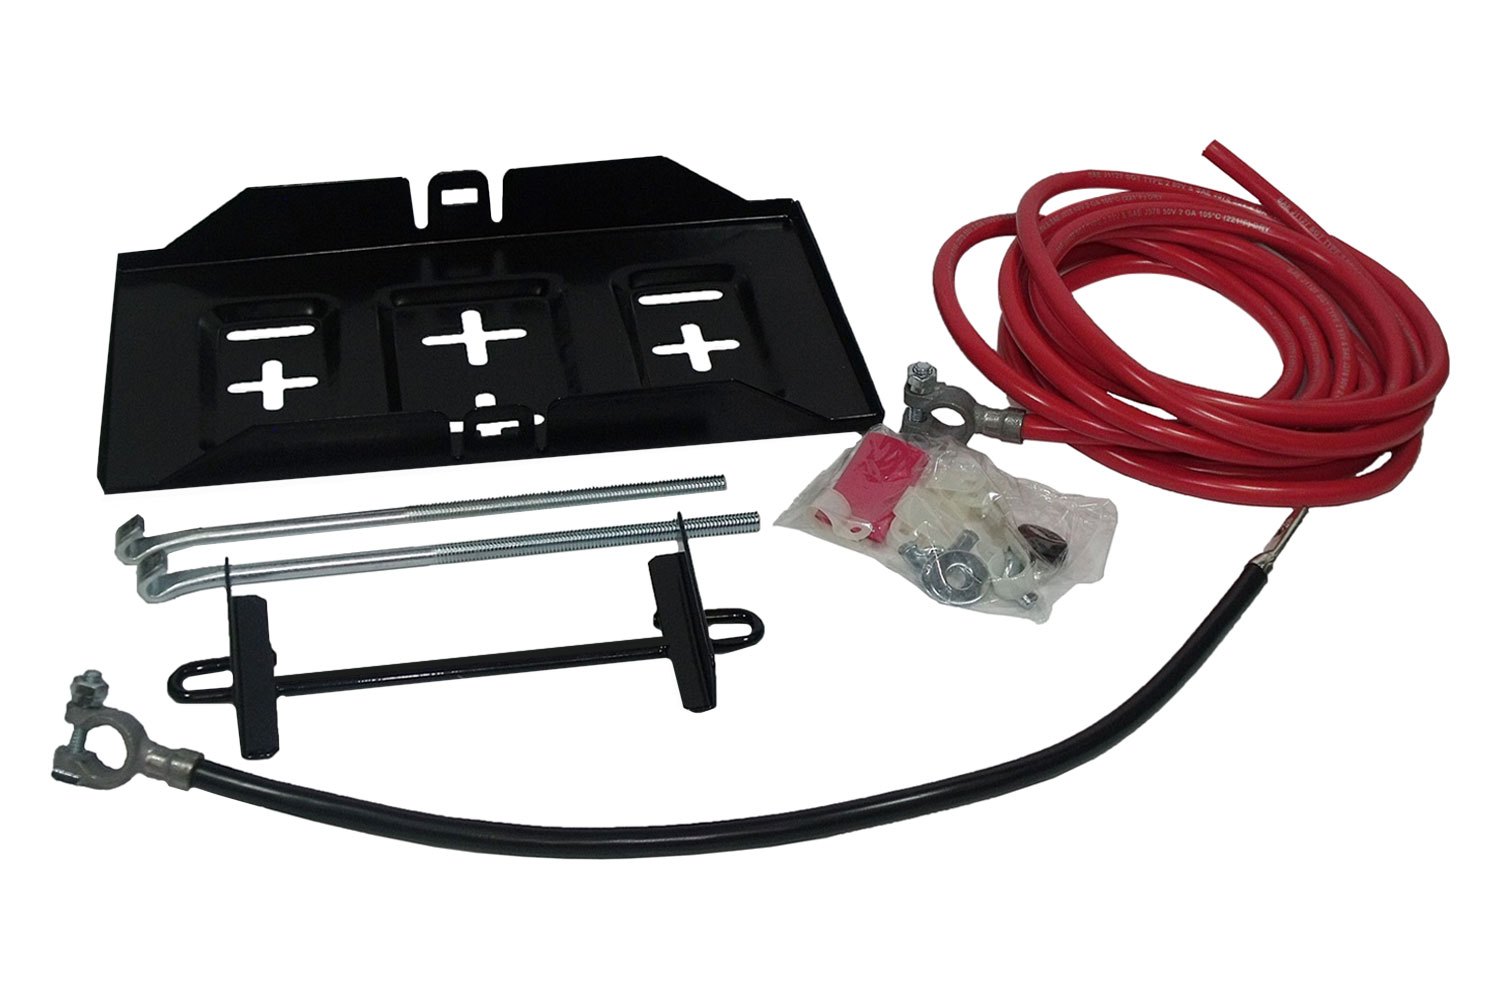 Battery kit. Mustang Battery Relocation Kit. Релокатор для антенны. Mustang Battery Relocation Kit 2015-current. Must Relocator Kit.